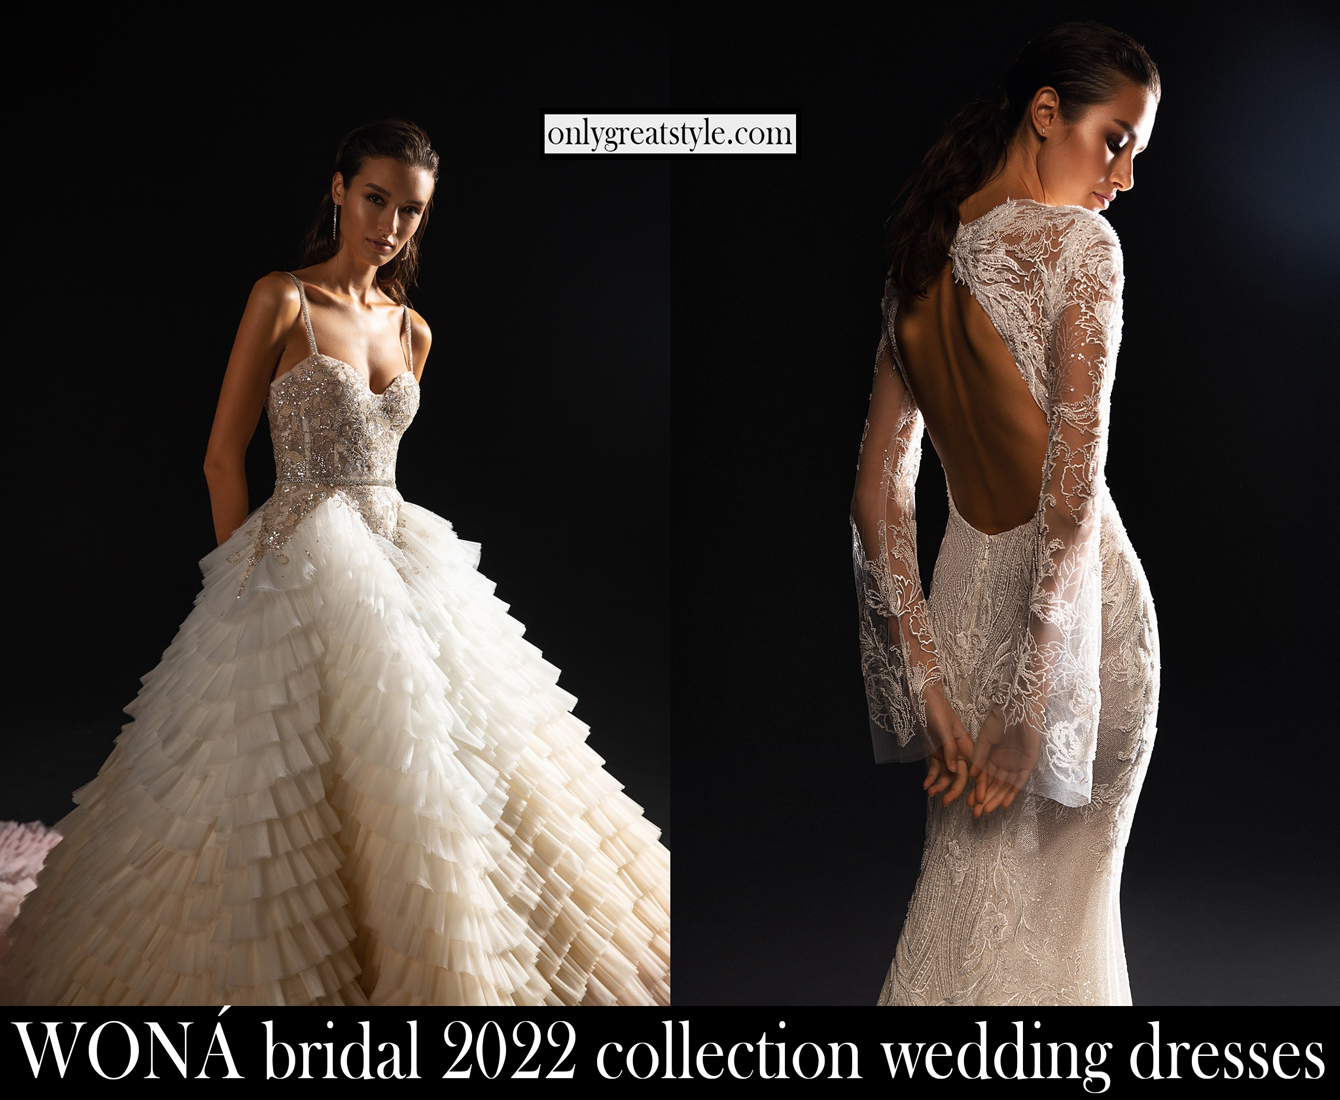 WONA bridal 2022 collection wedding dresses